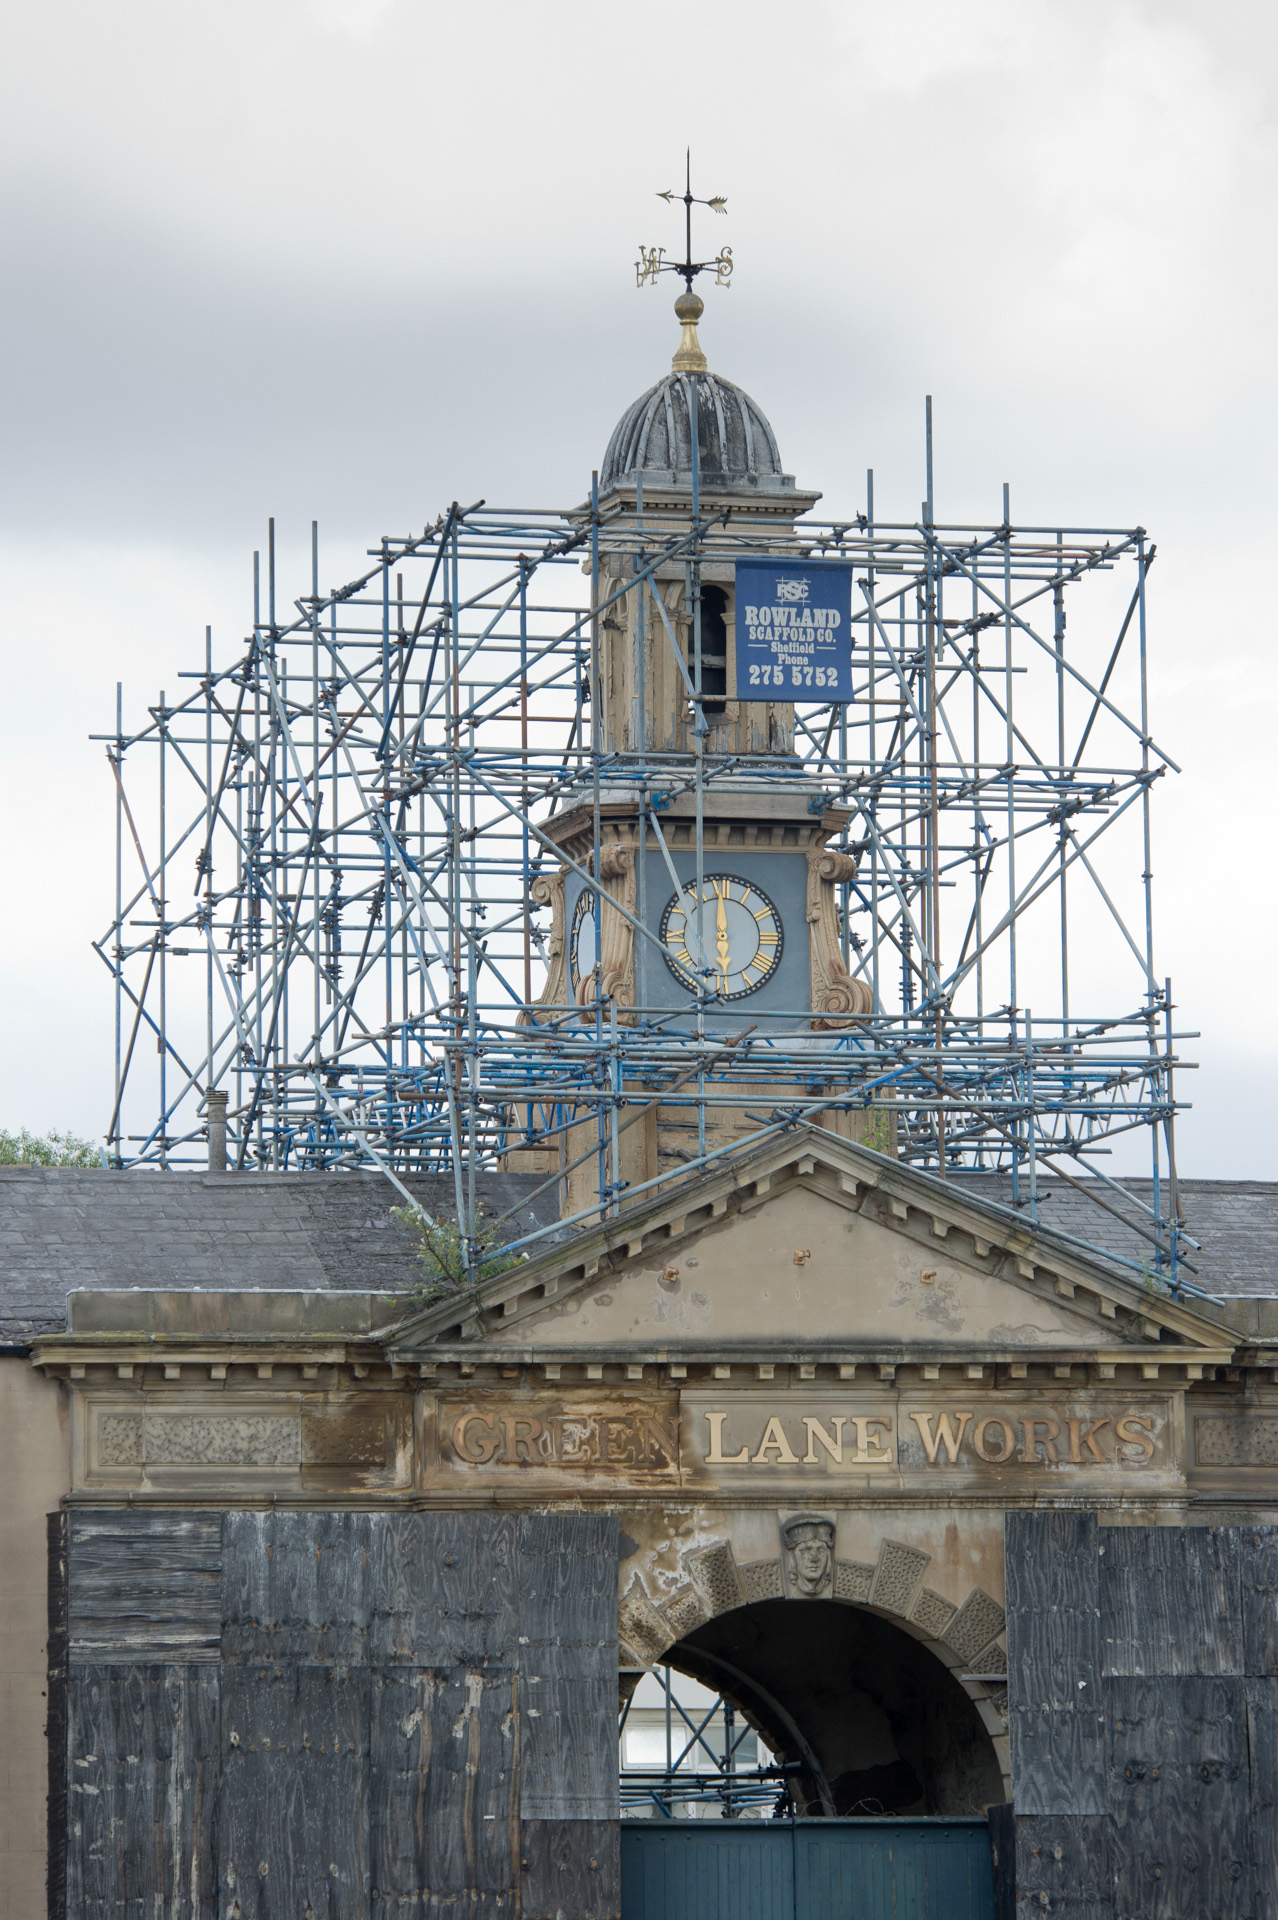 Clock tower under conservation, Green Lane Works, Sheffield.